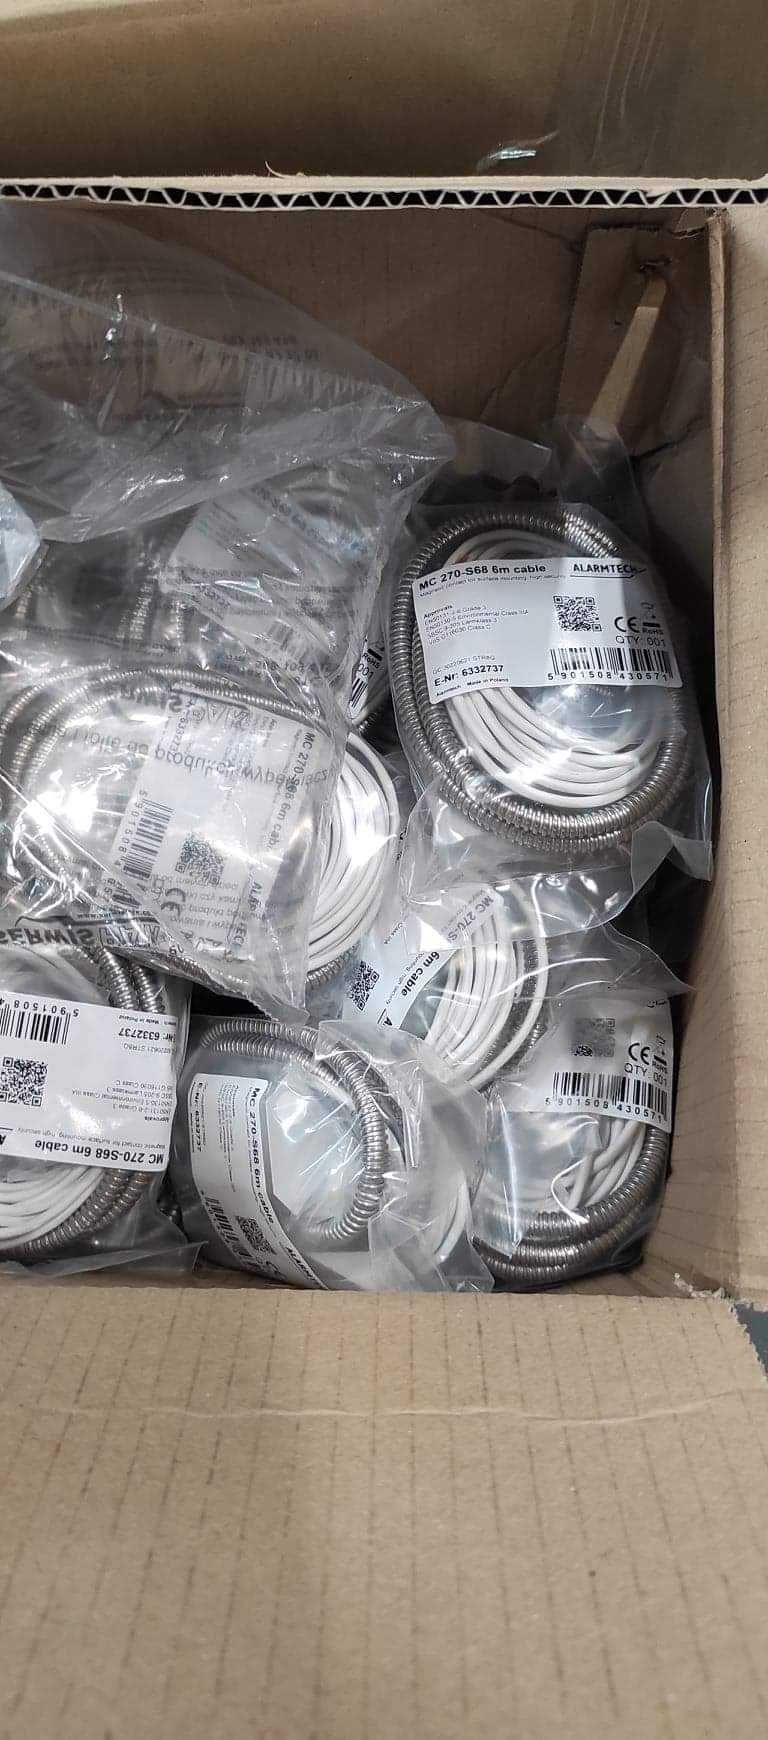 MC  270-S68 6m cable